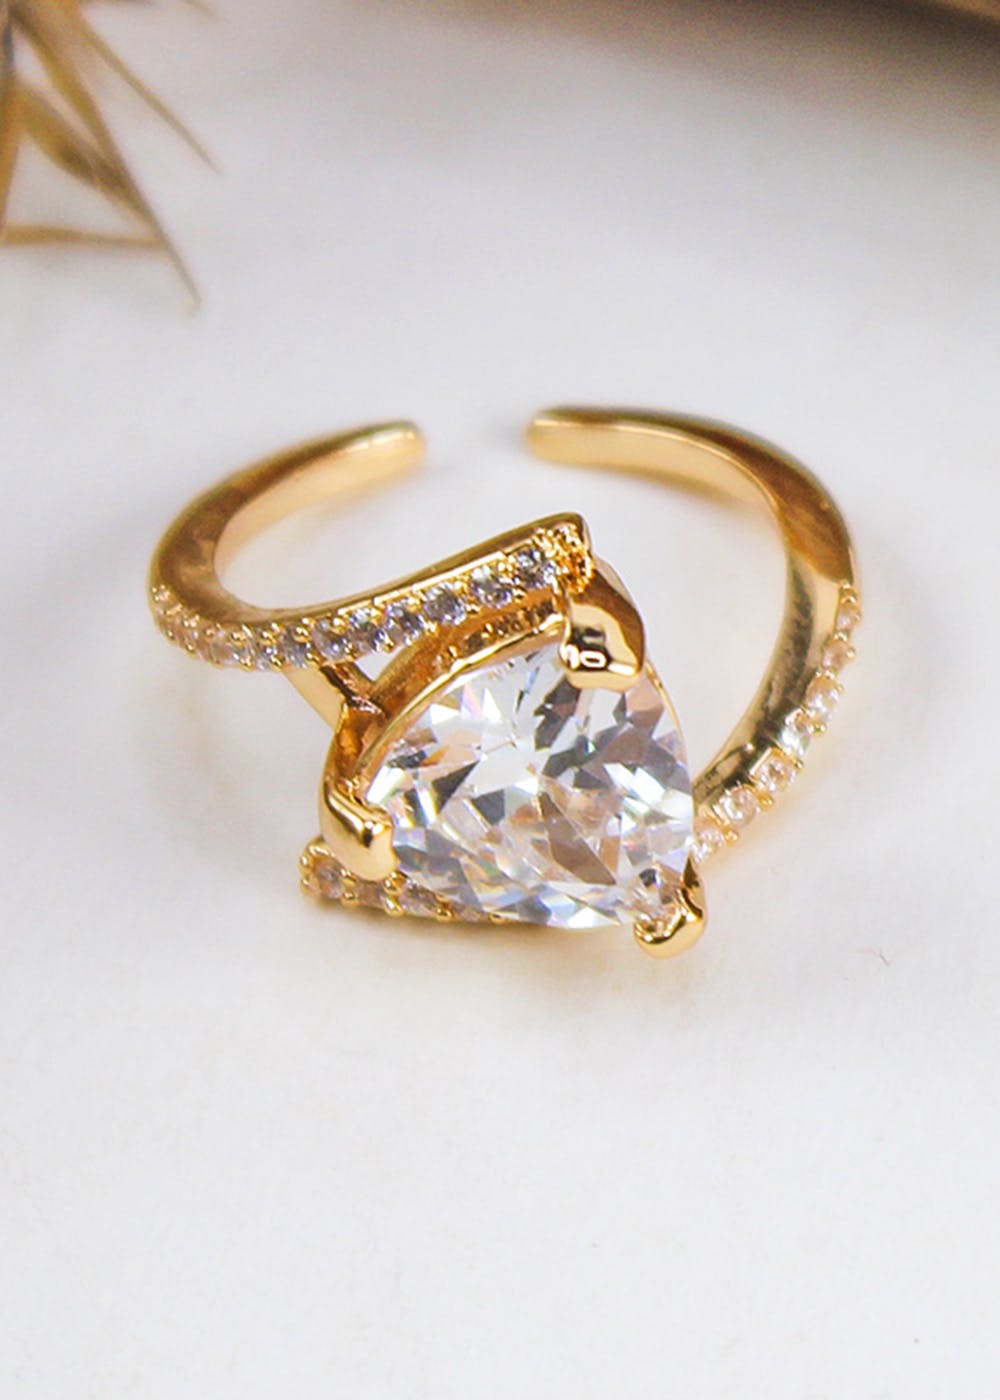 Designer Golden Ring With Stone